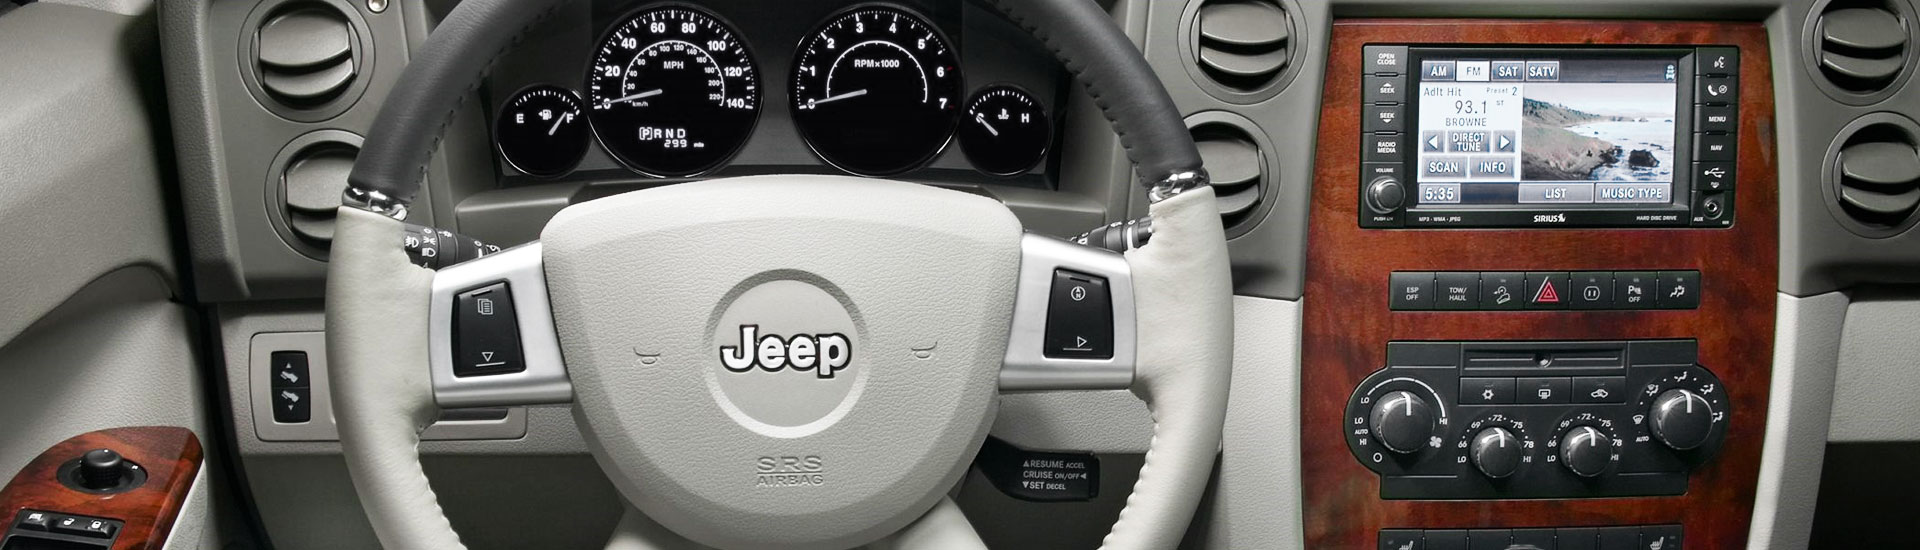 2022 Jeep Wrangler Custom Dash Kits